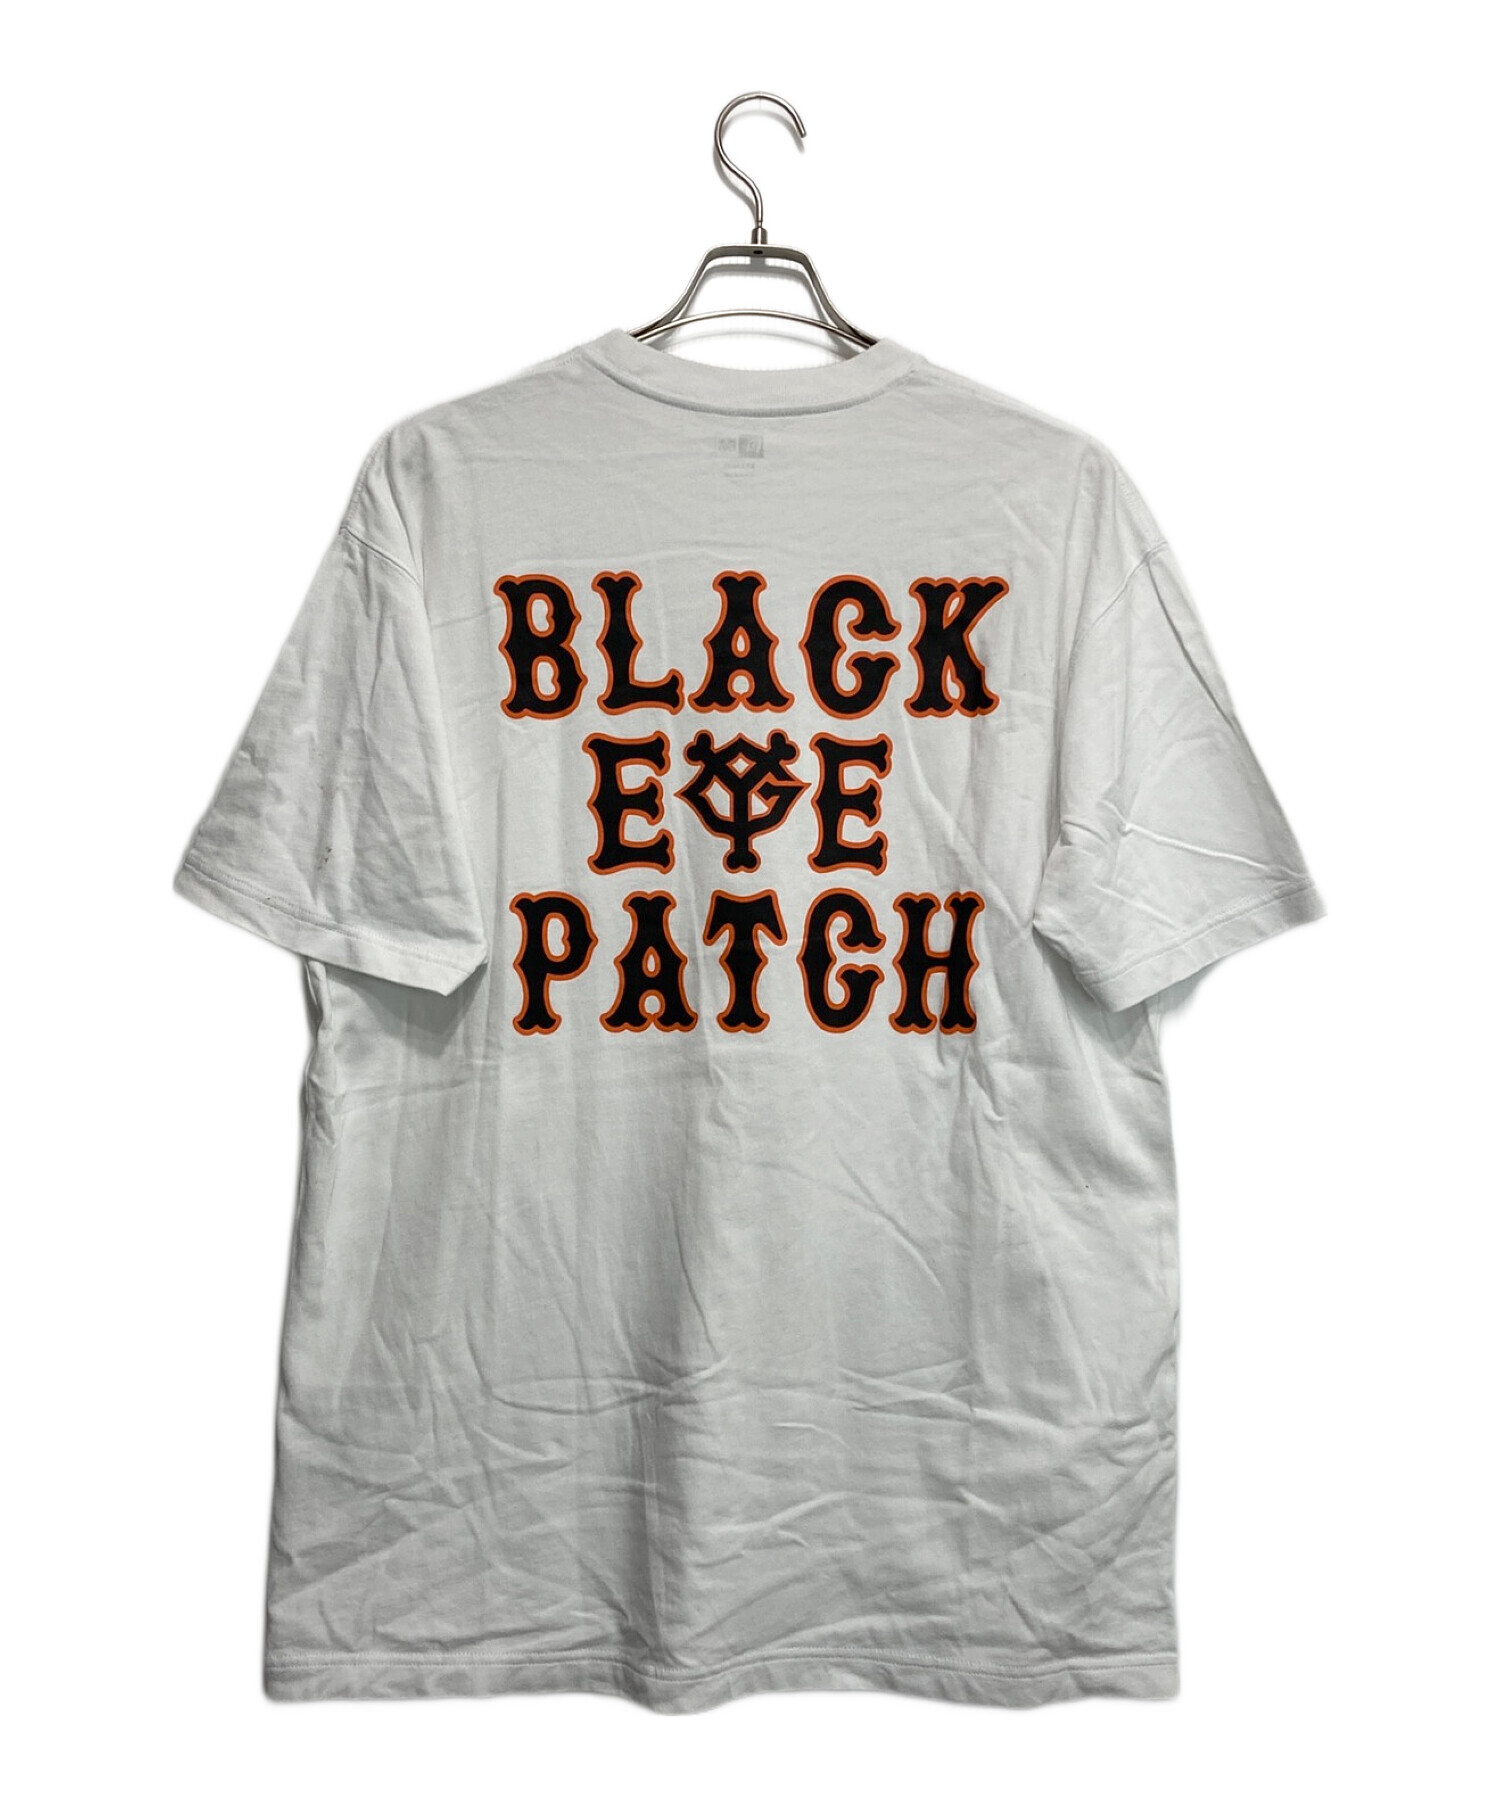 New Era (ニューエラ) BlackEyePatch (ブラックアイパッチ) 読売ジャイアンツ (ヨミウリジャイアンツ) コラボTシャツ  ホワイト サイズ:XXL